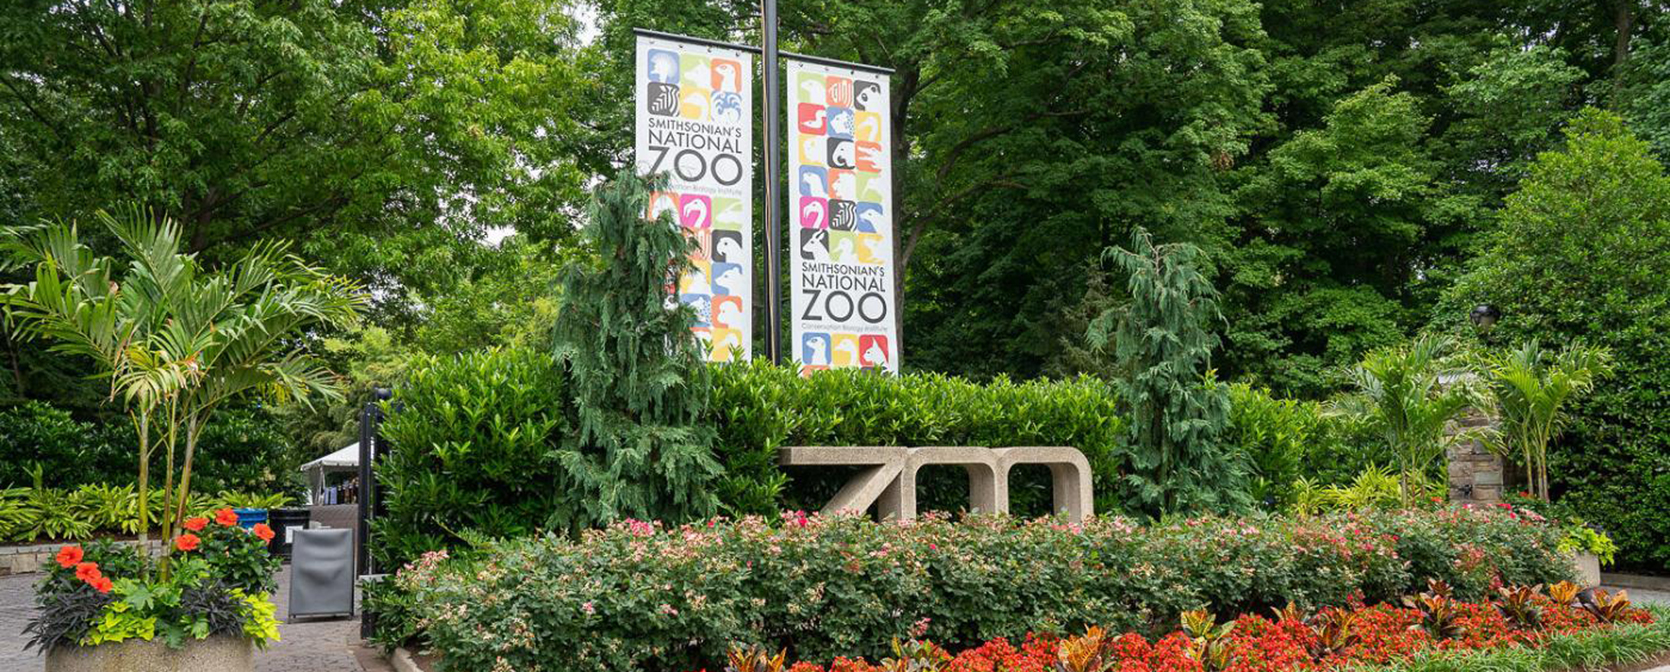 National Zoo Entrance 